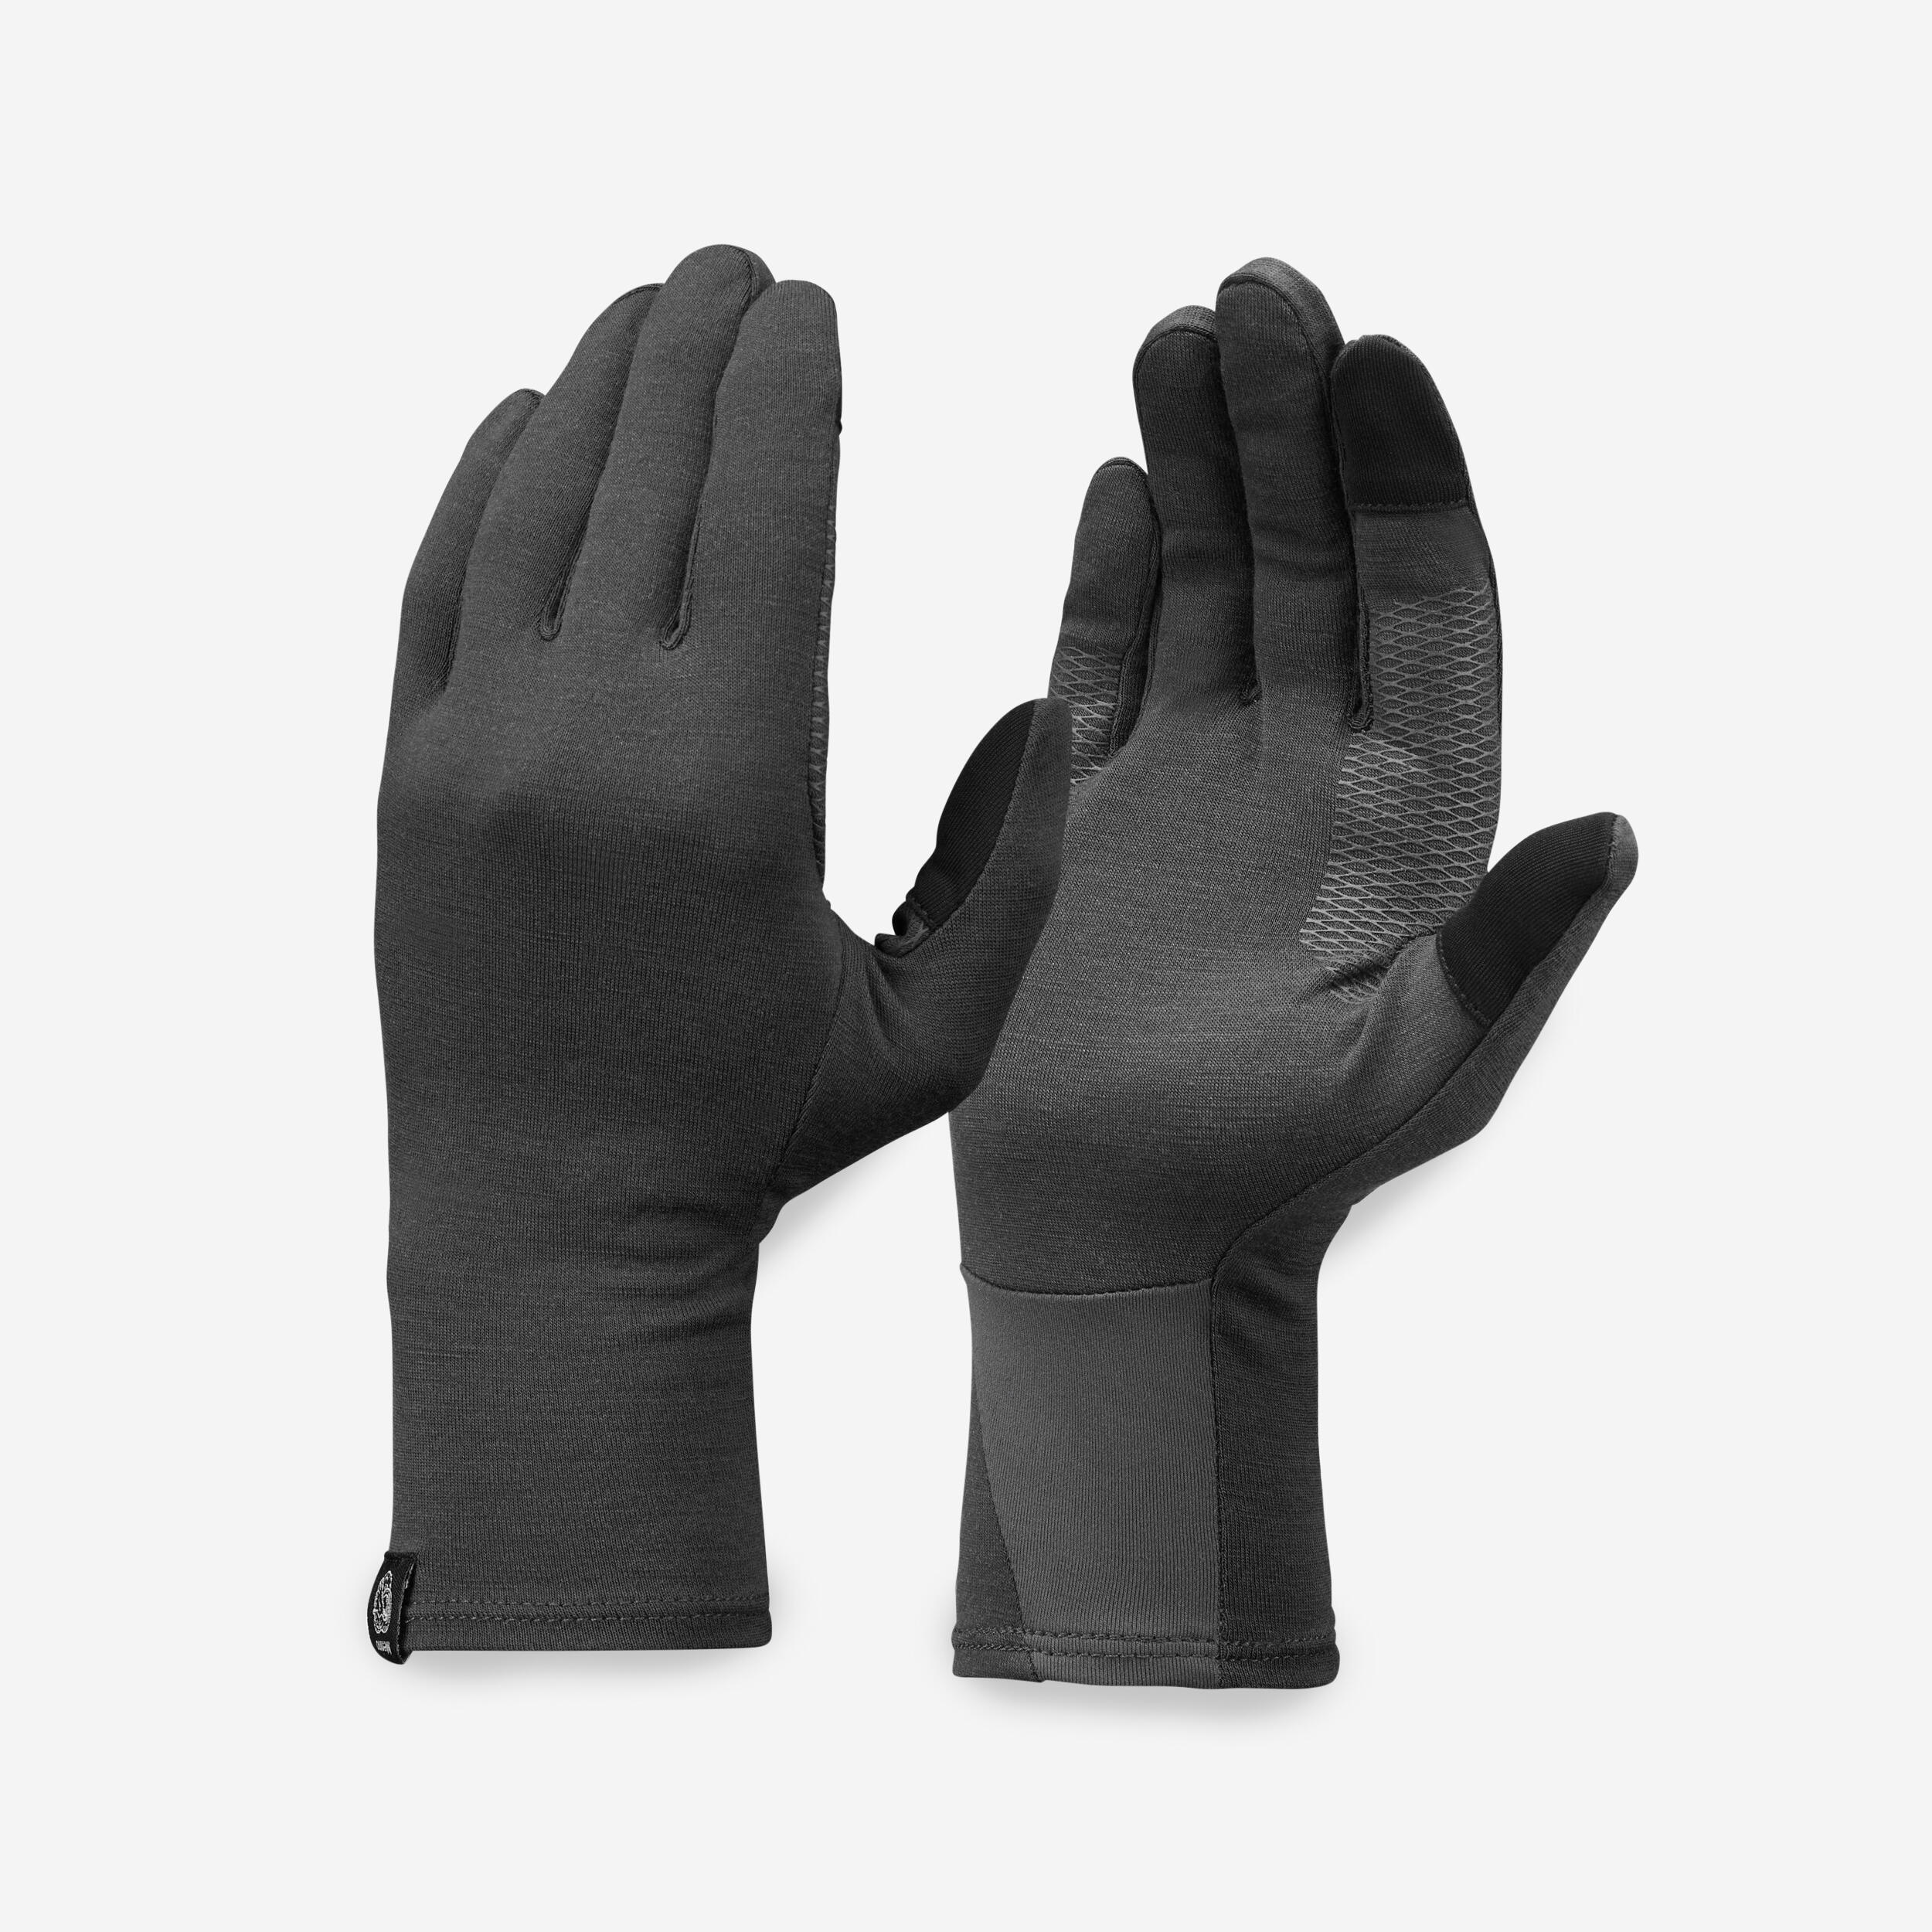 FORCLAZ Adult Mountain Trekking Merino Wool Liner Gloves - MT500 Grey